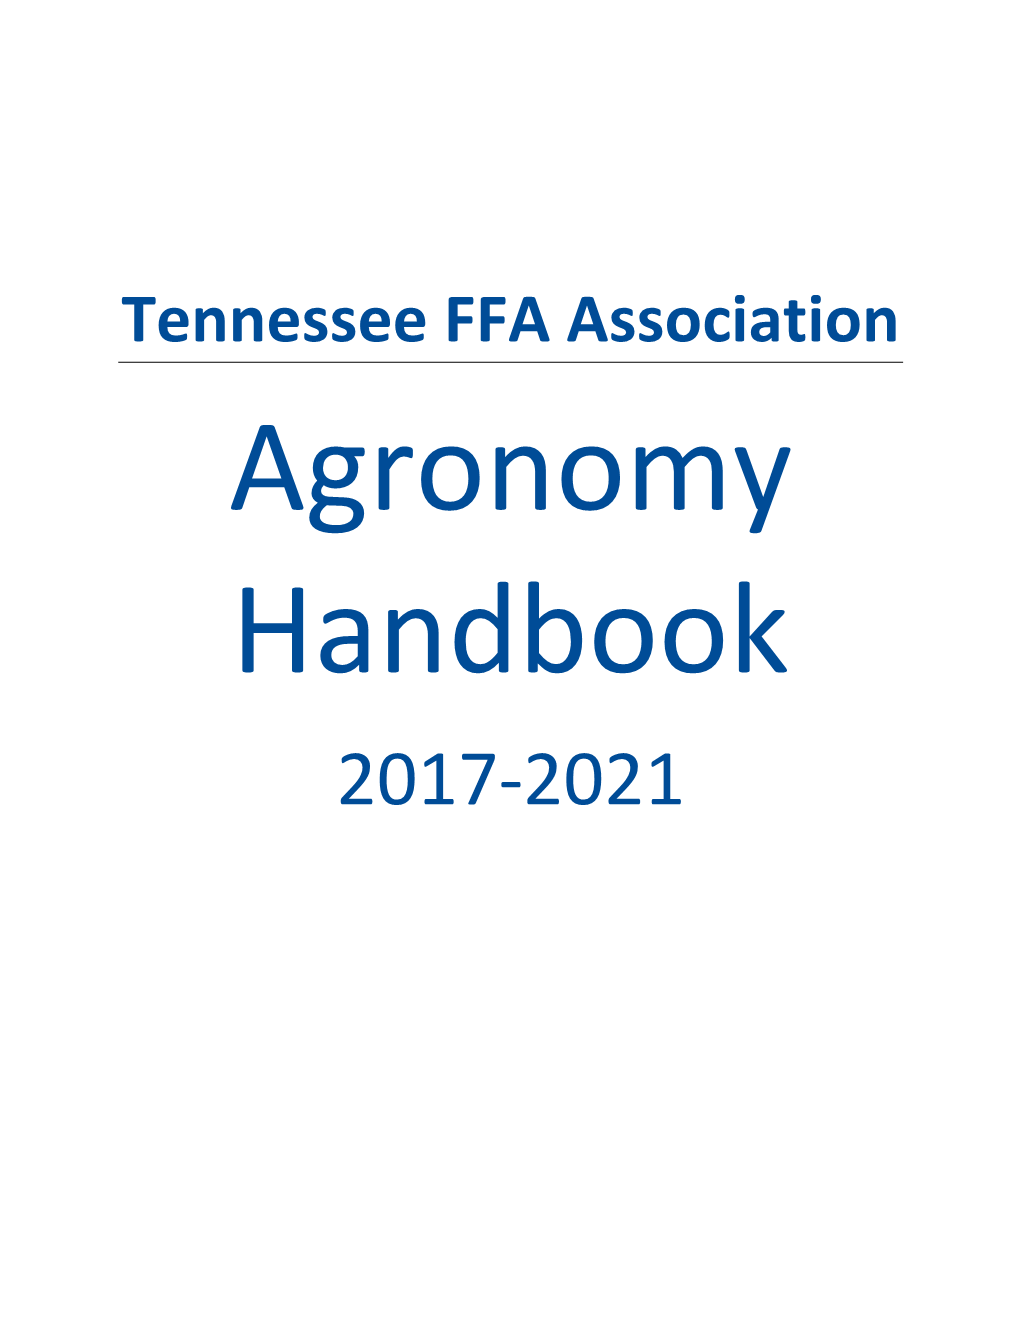 Agronomy Handbook 2017-2021